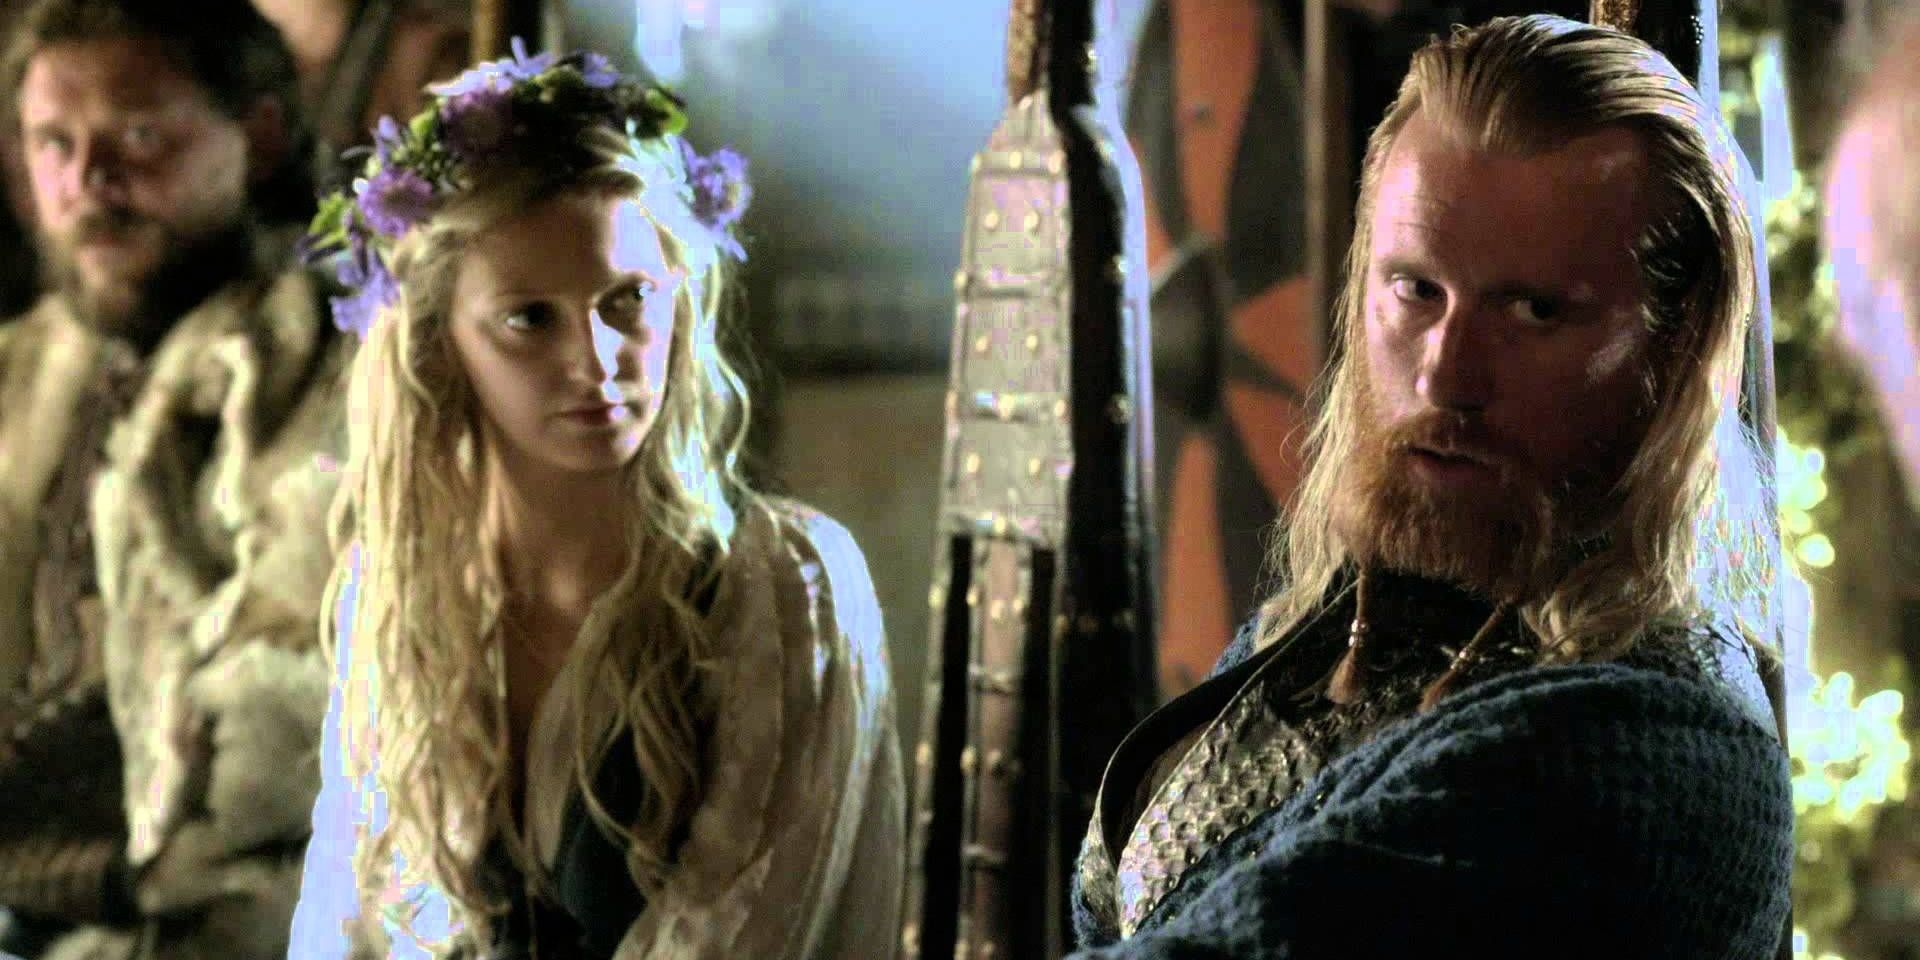 Torvi and Jalr Borg's wedding ceremony in Vikings